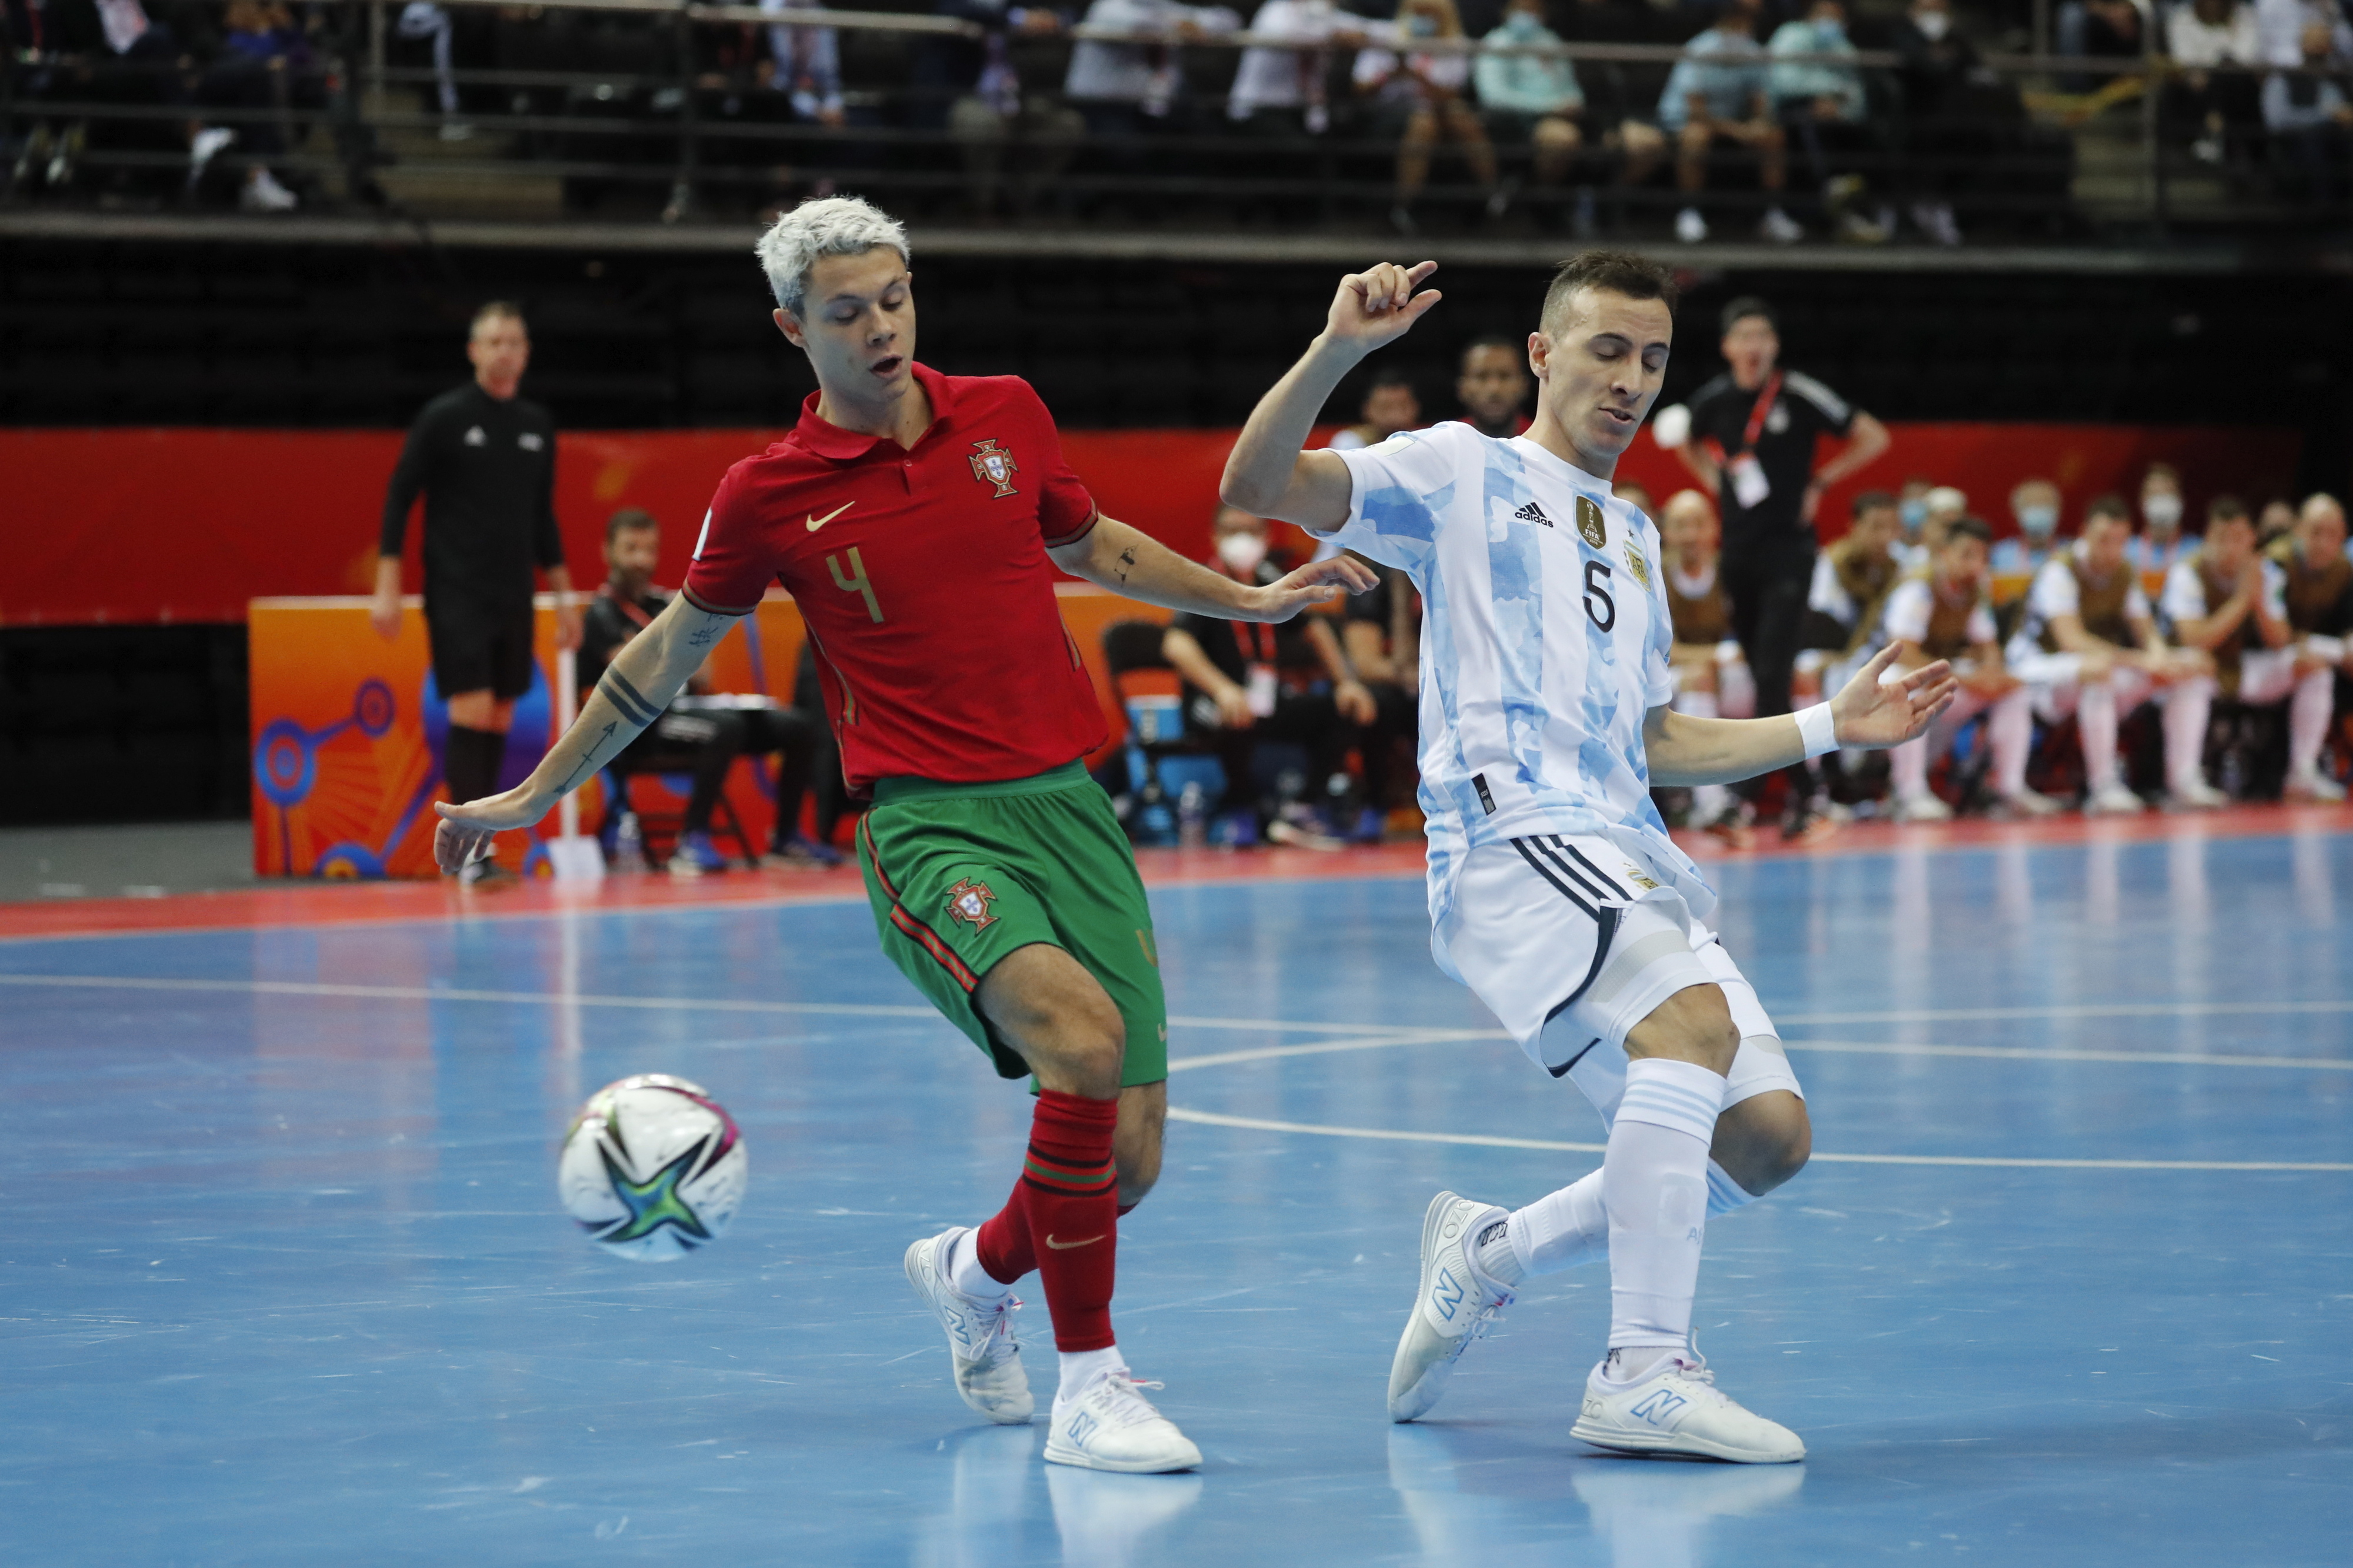 Portugal on X: 🗓 𝕮𝖍𝖊𝖌𝖔𝖚 𝖔 𝖉𝖎𝖆! Jogo 1⃣ no Mundial de Futsal 2021!  🏆 𝘍𝘶𝘵𝘴𝘢𝘭 𝘞𝘰𝘳𝘭𝘥 𝘊𝘶𝘱 🇹🇭✖🇵🇹 ⌚ 18H 📺 @RTP1 #VamosComTudo  #FutsalPT  / X